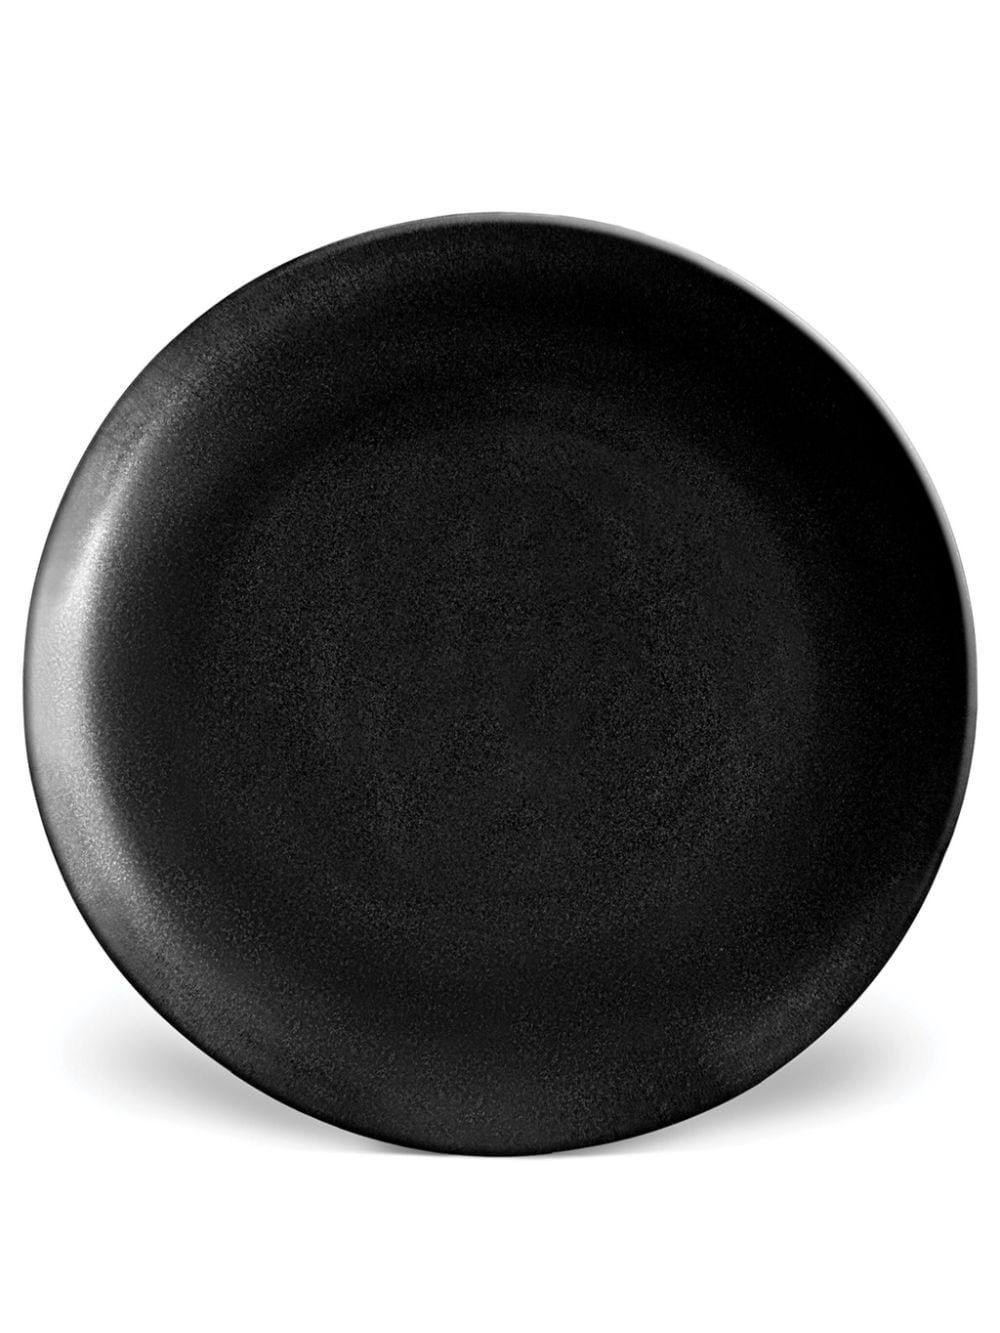 L'Objet Terra porcelain plate (27cm) - Black von L'Objet